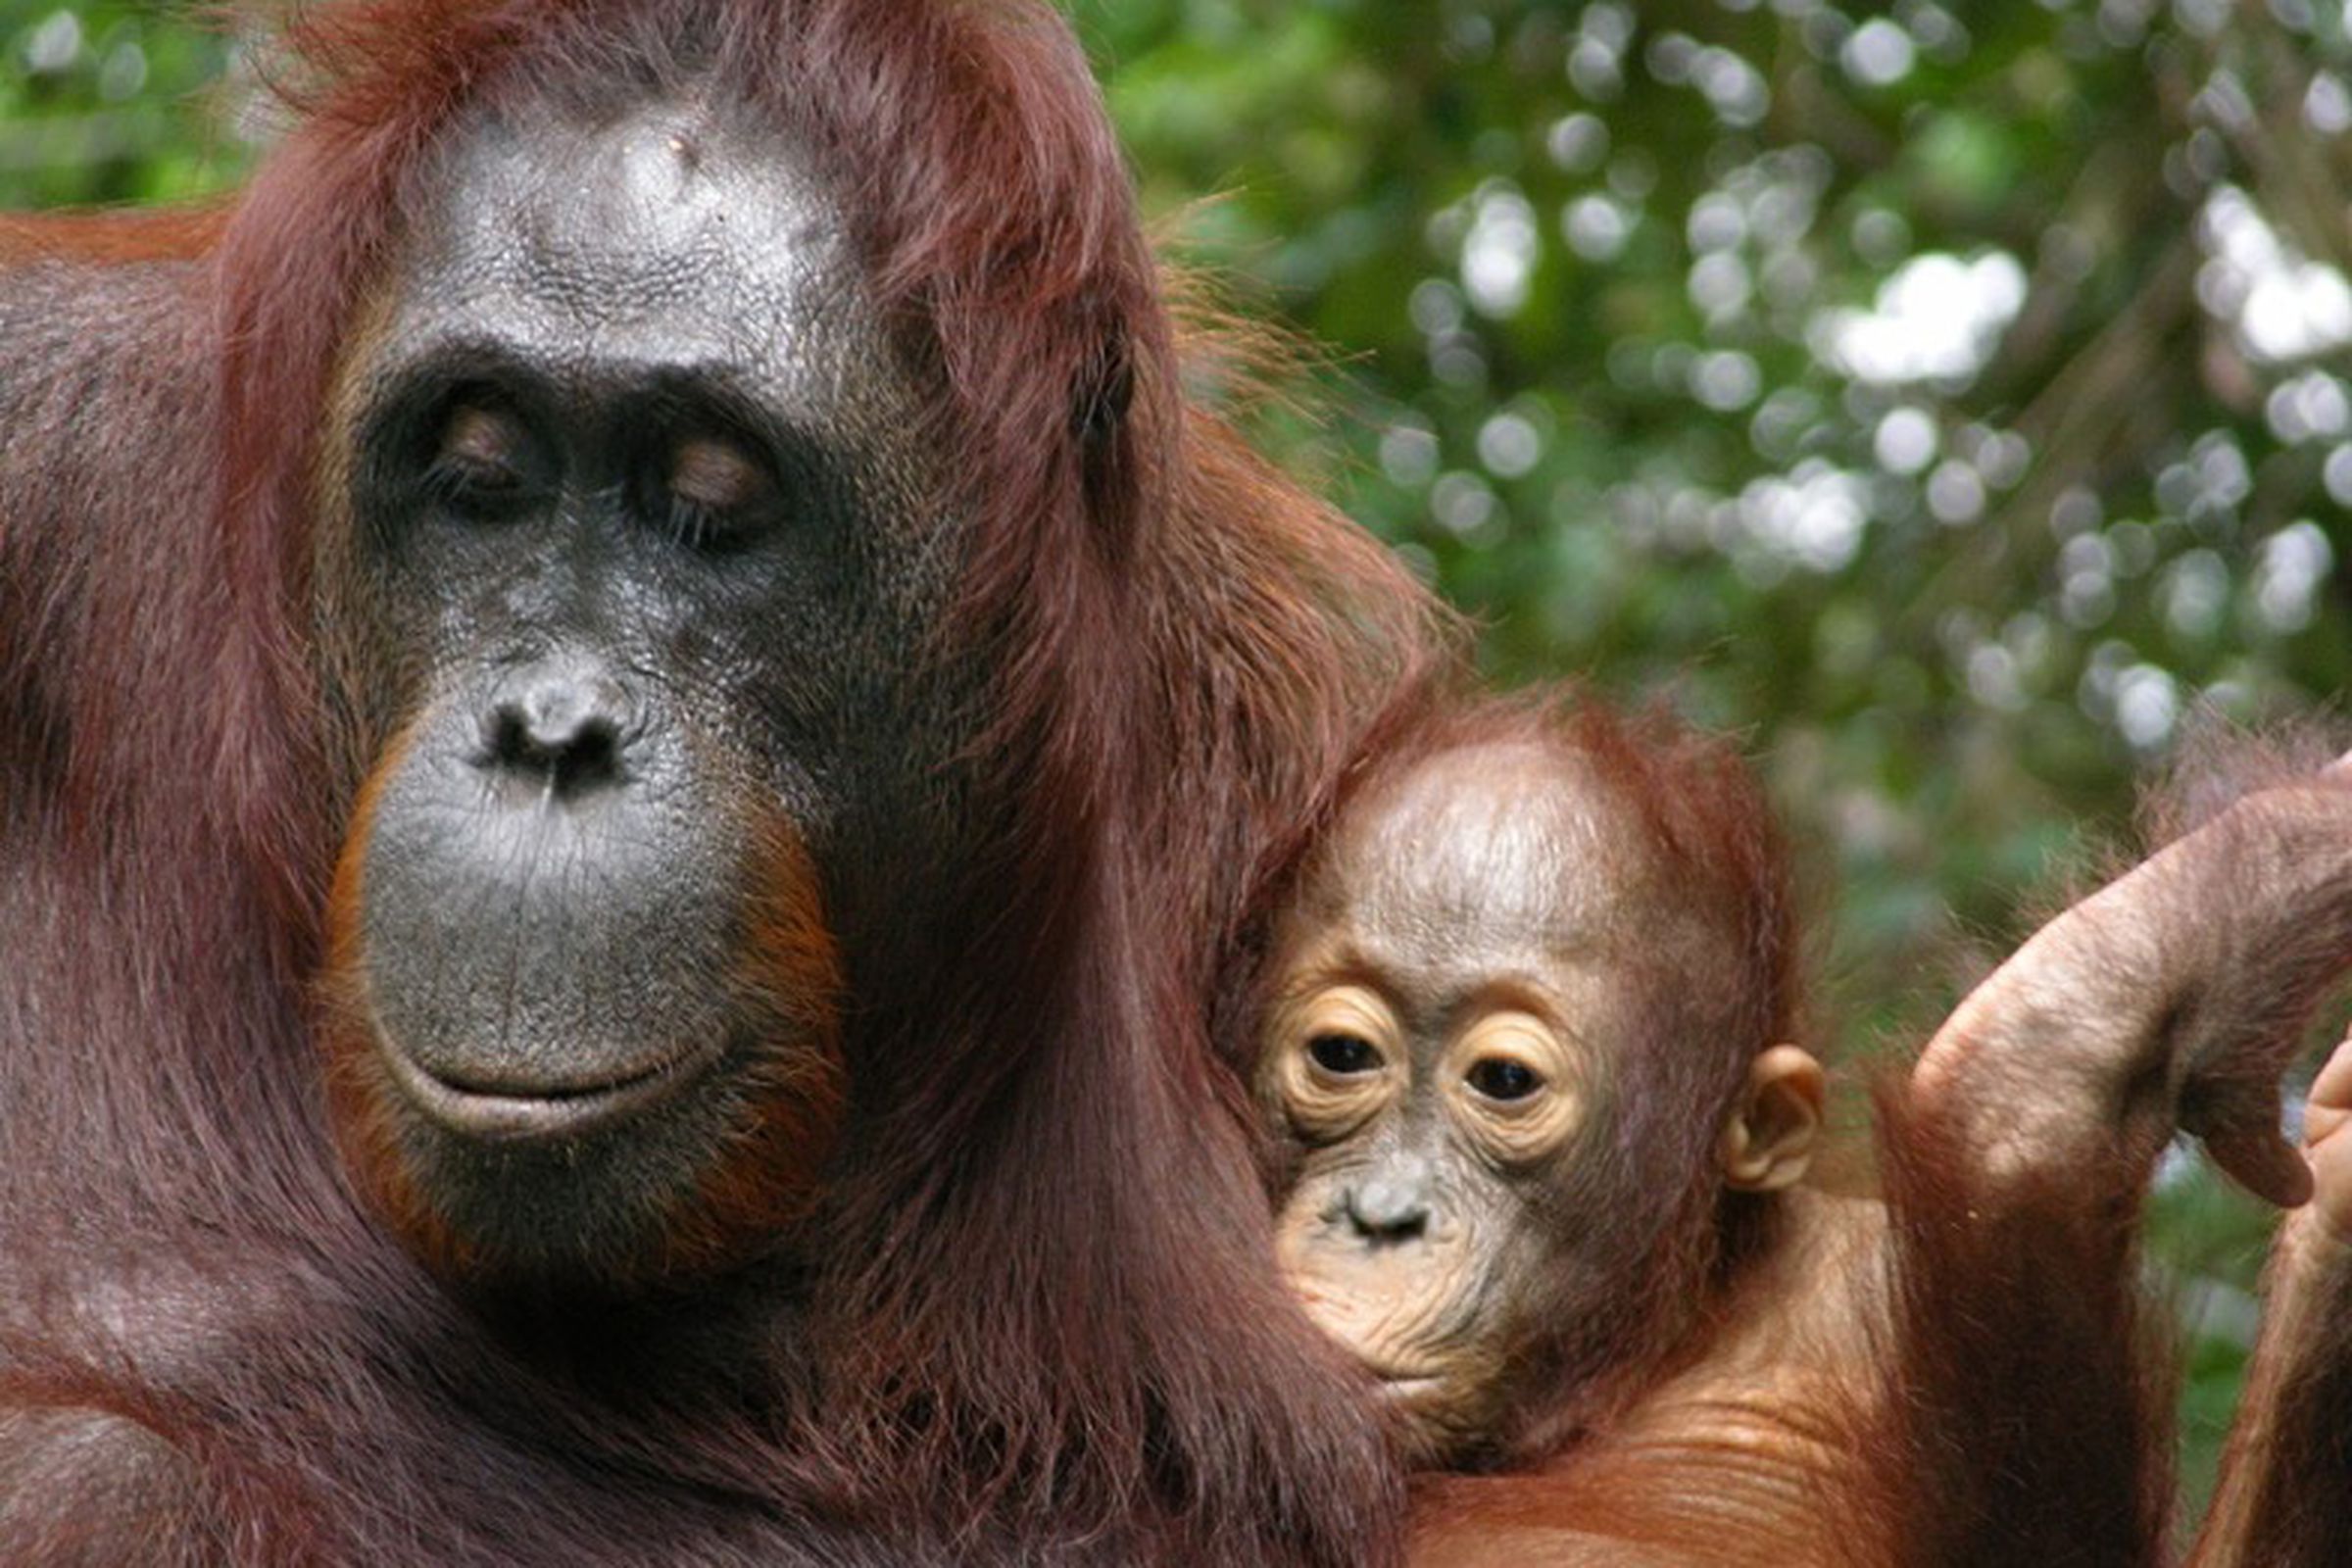 An infant orangutan nursing.